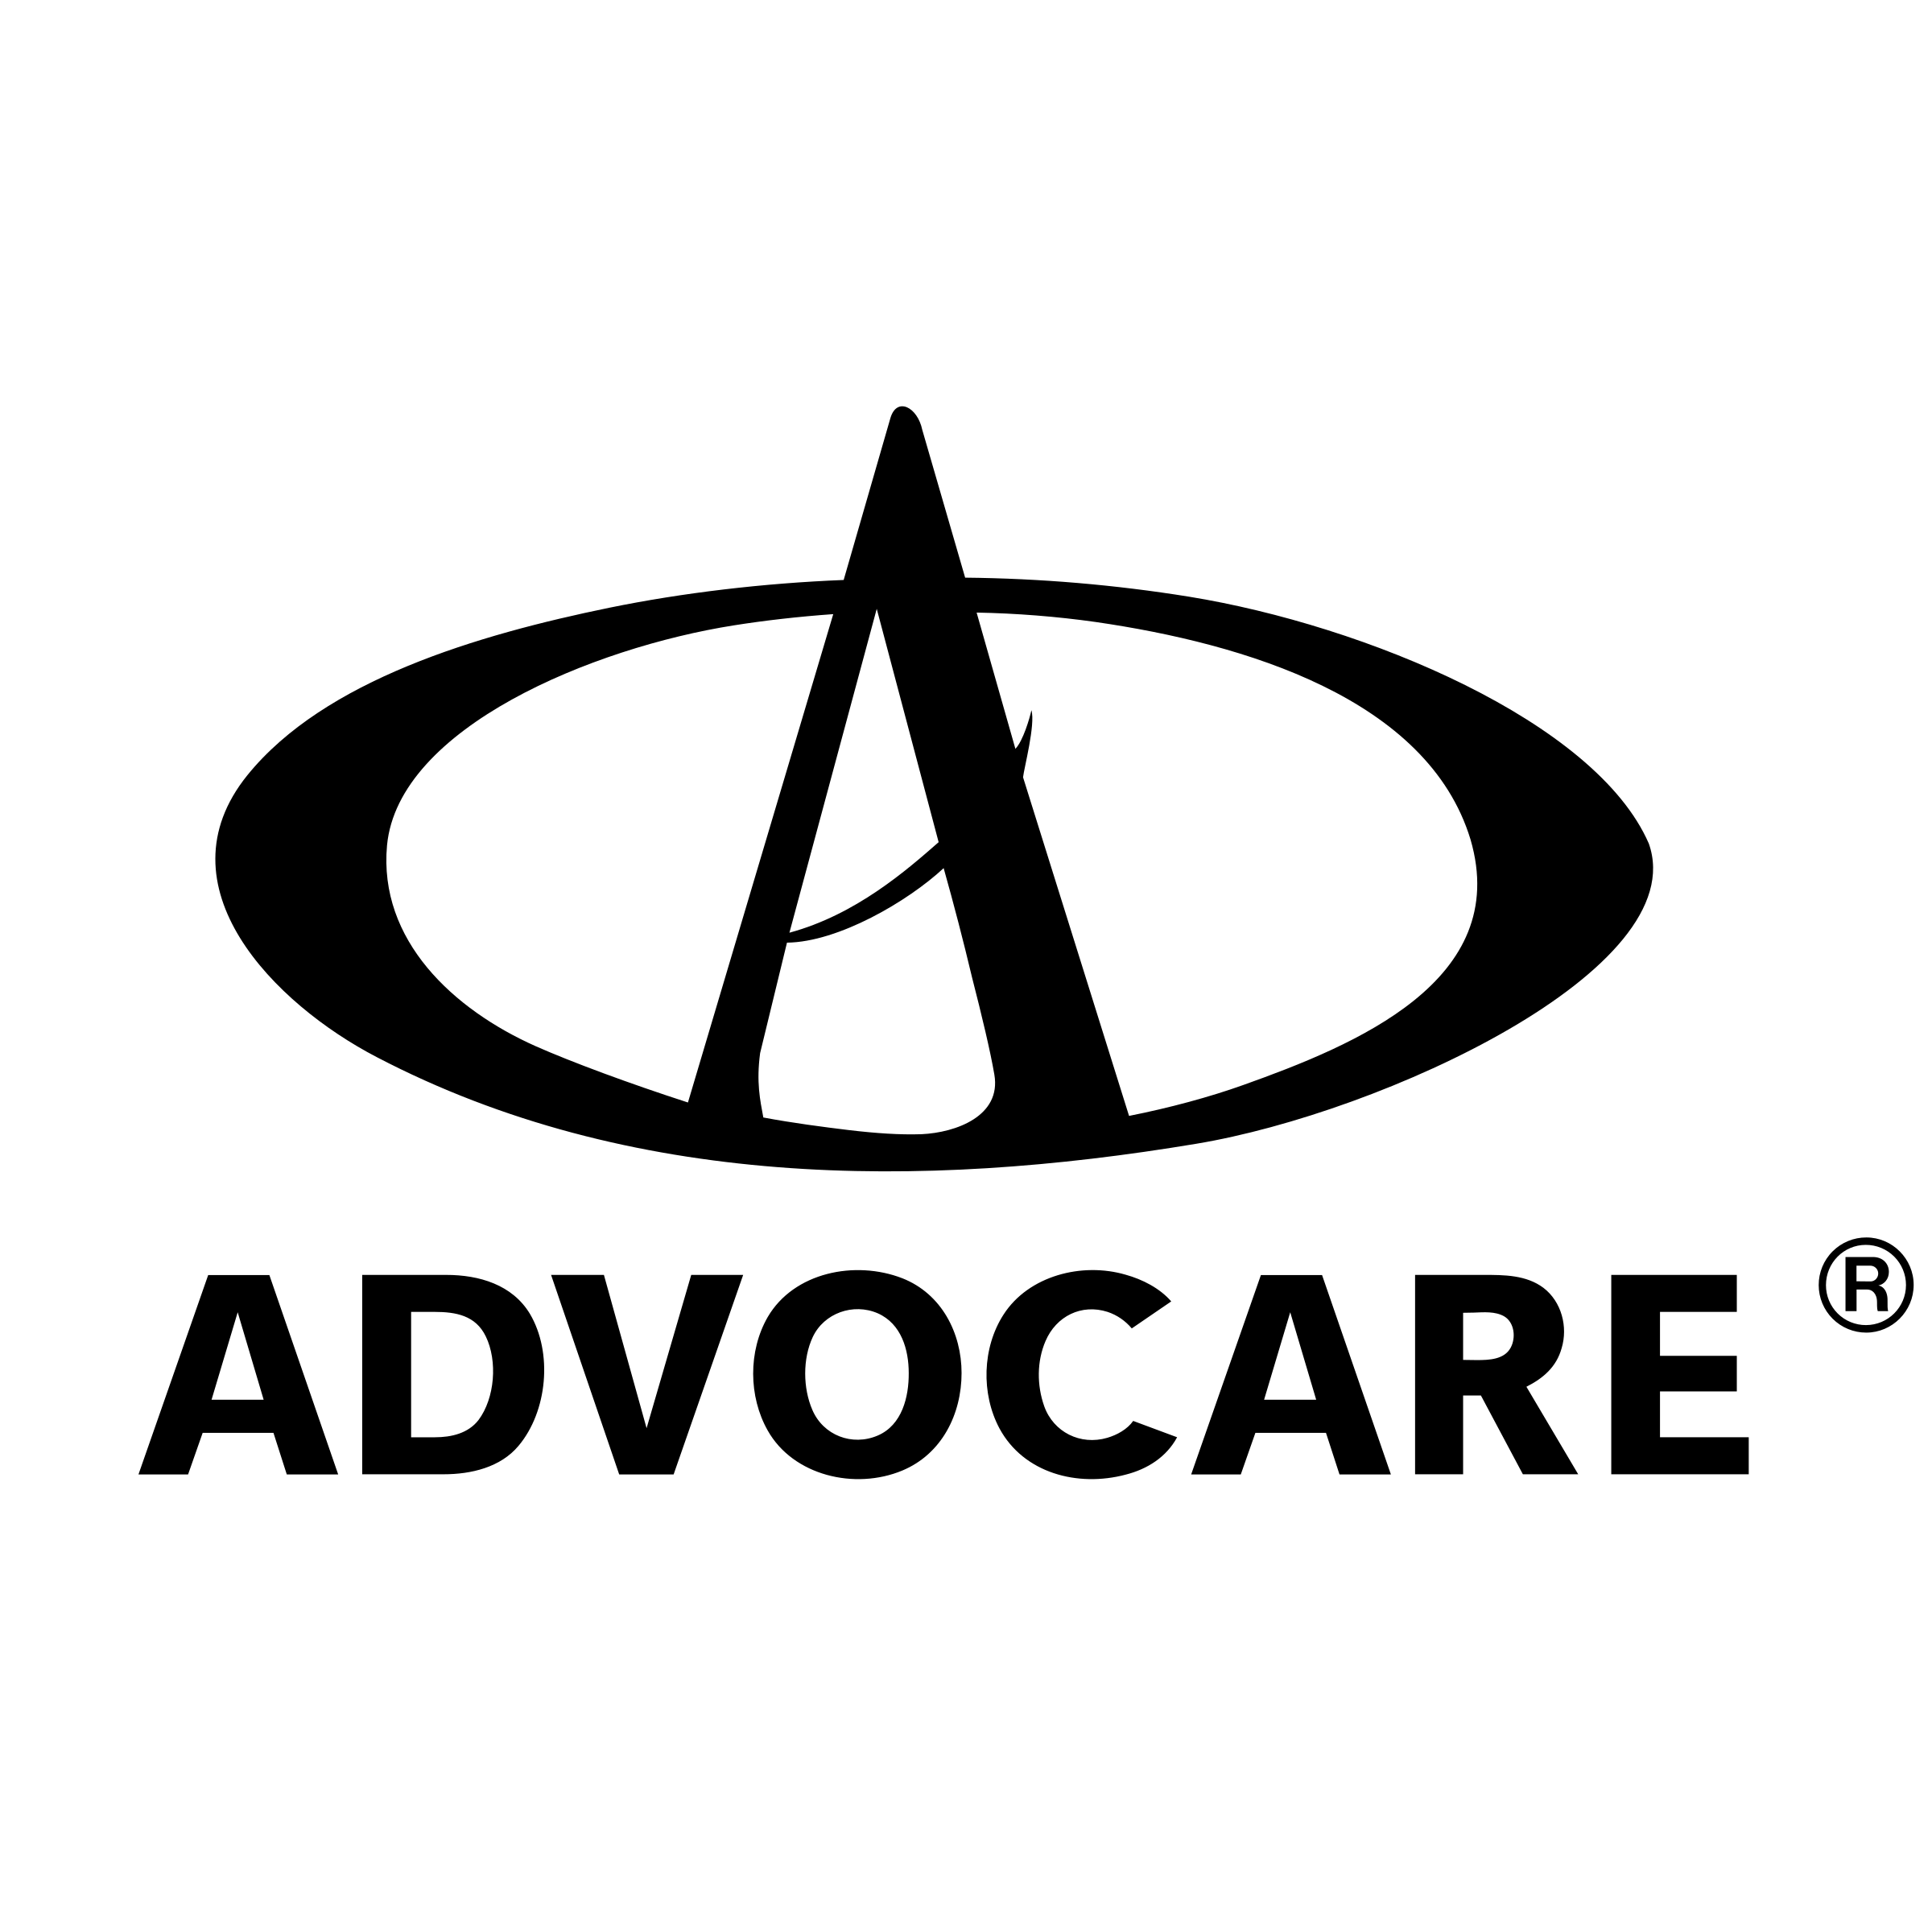 Blue and White AdvoCare Logo - Advocare 01 Logo PNG Transparent & SVG Vector